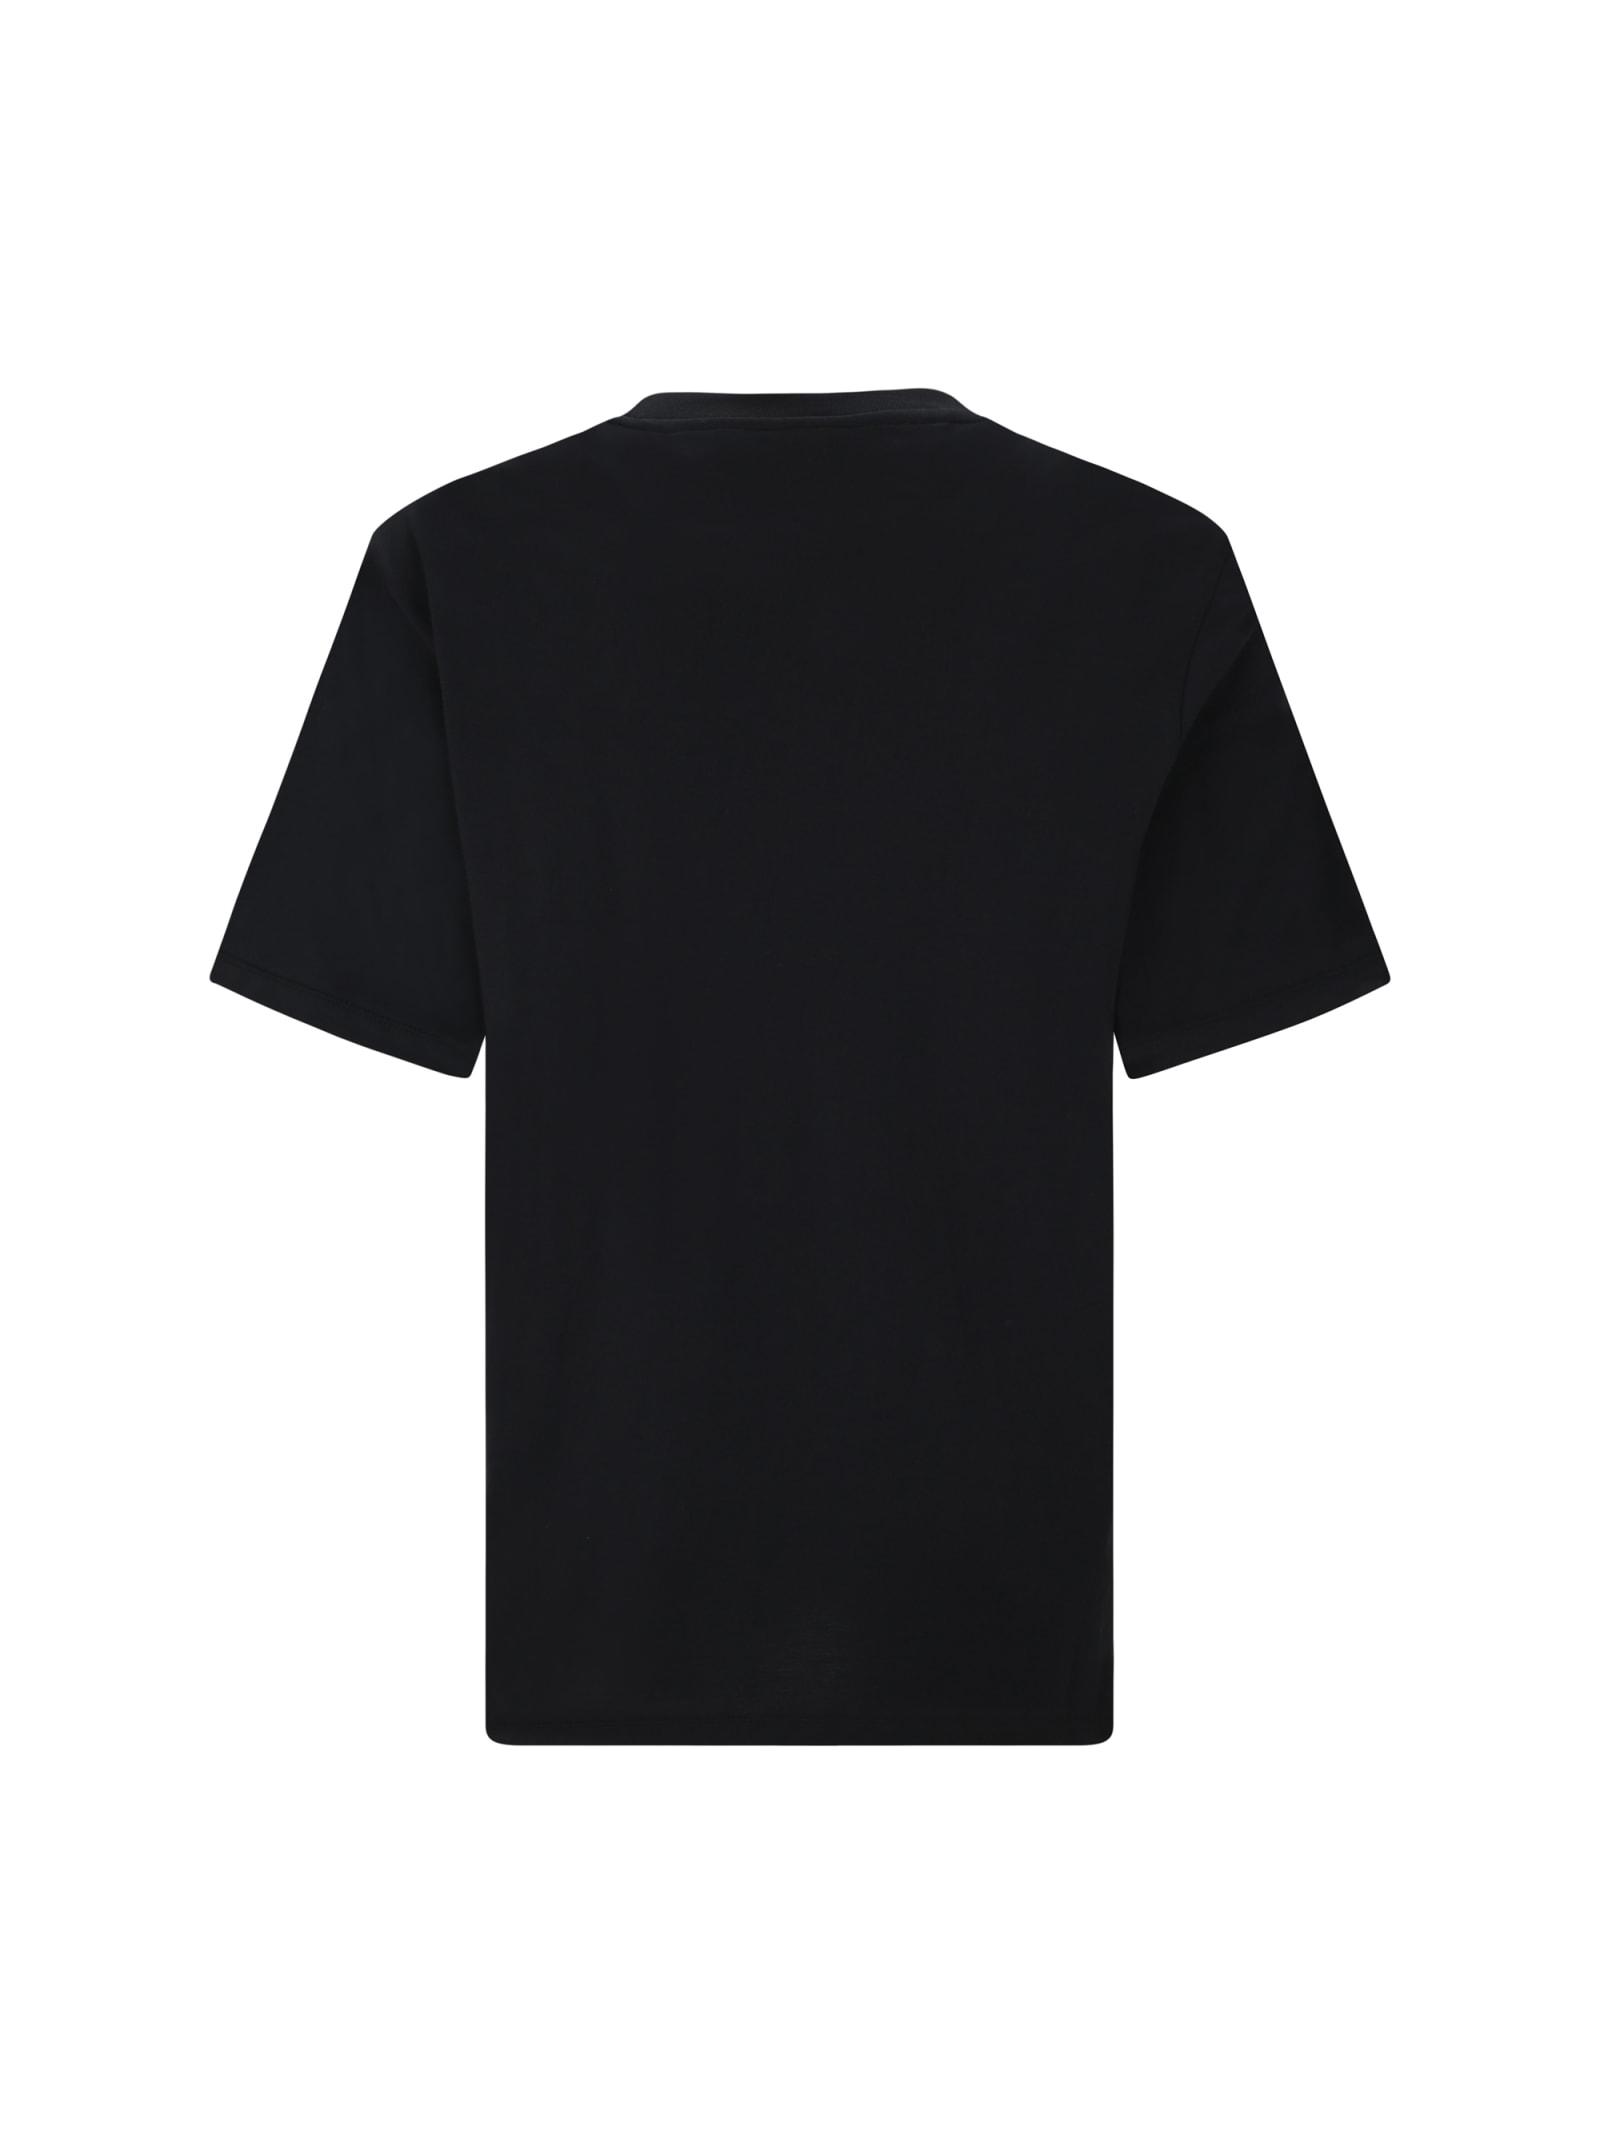 Fendi T-shirts in Black for Men | Lyst